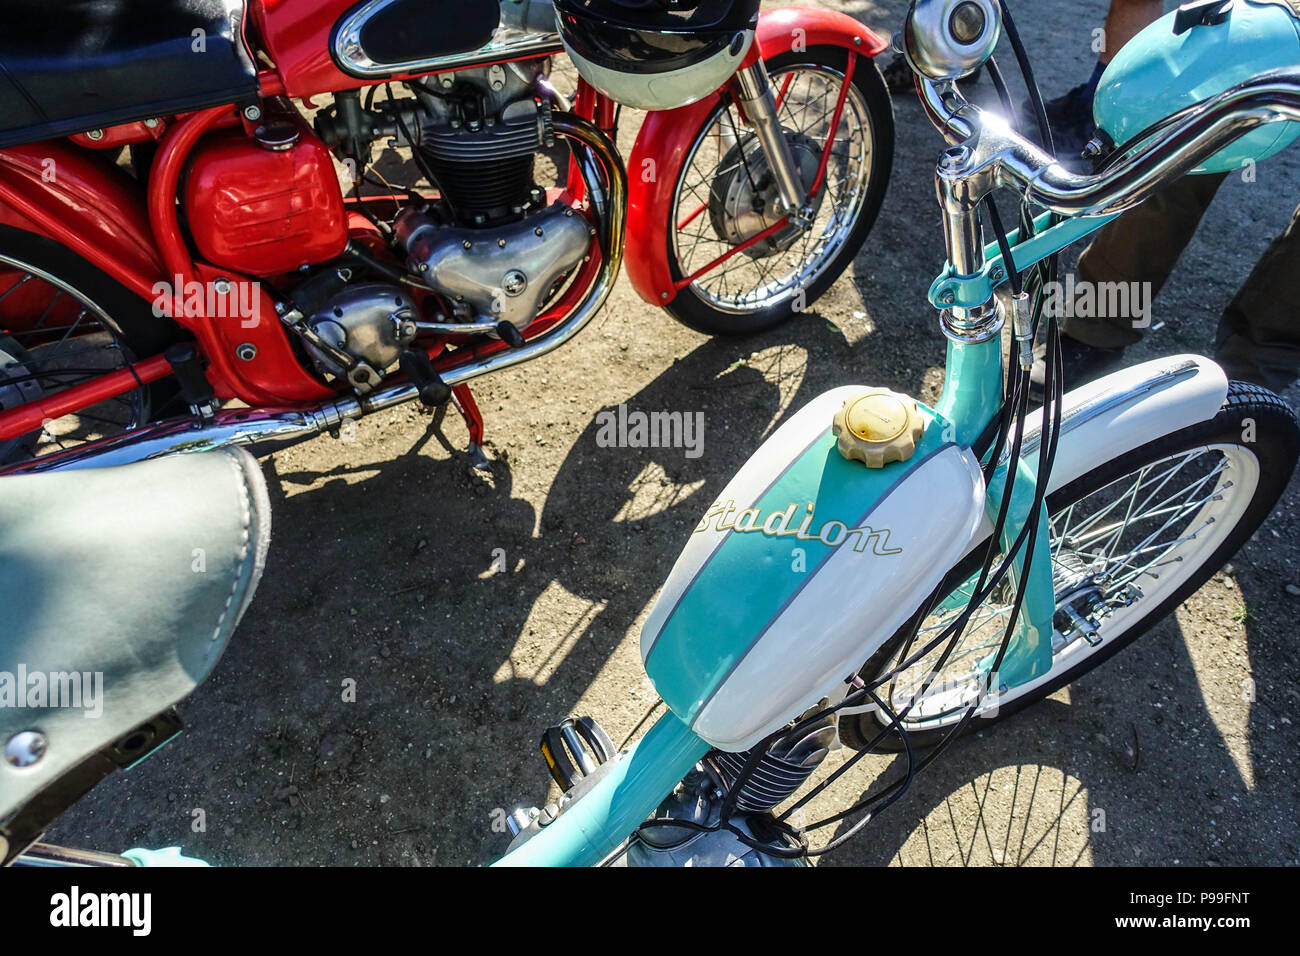 Czechoslovak motorcycle, Stadion moped, sixties veteran, Czech Republic, Europe Stock Photo